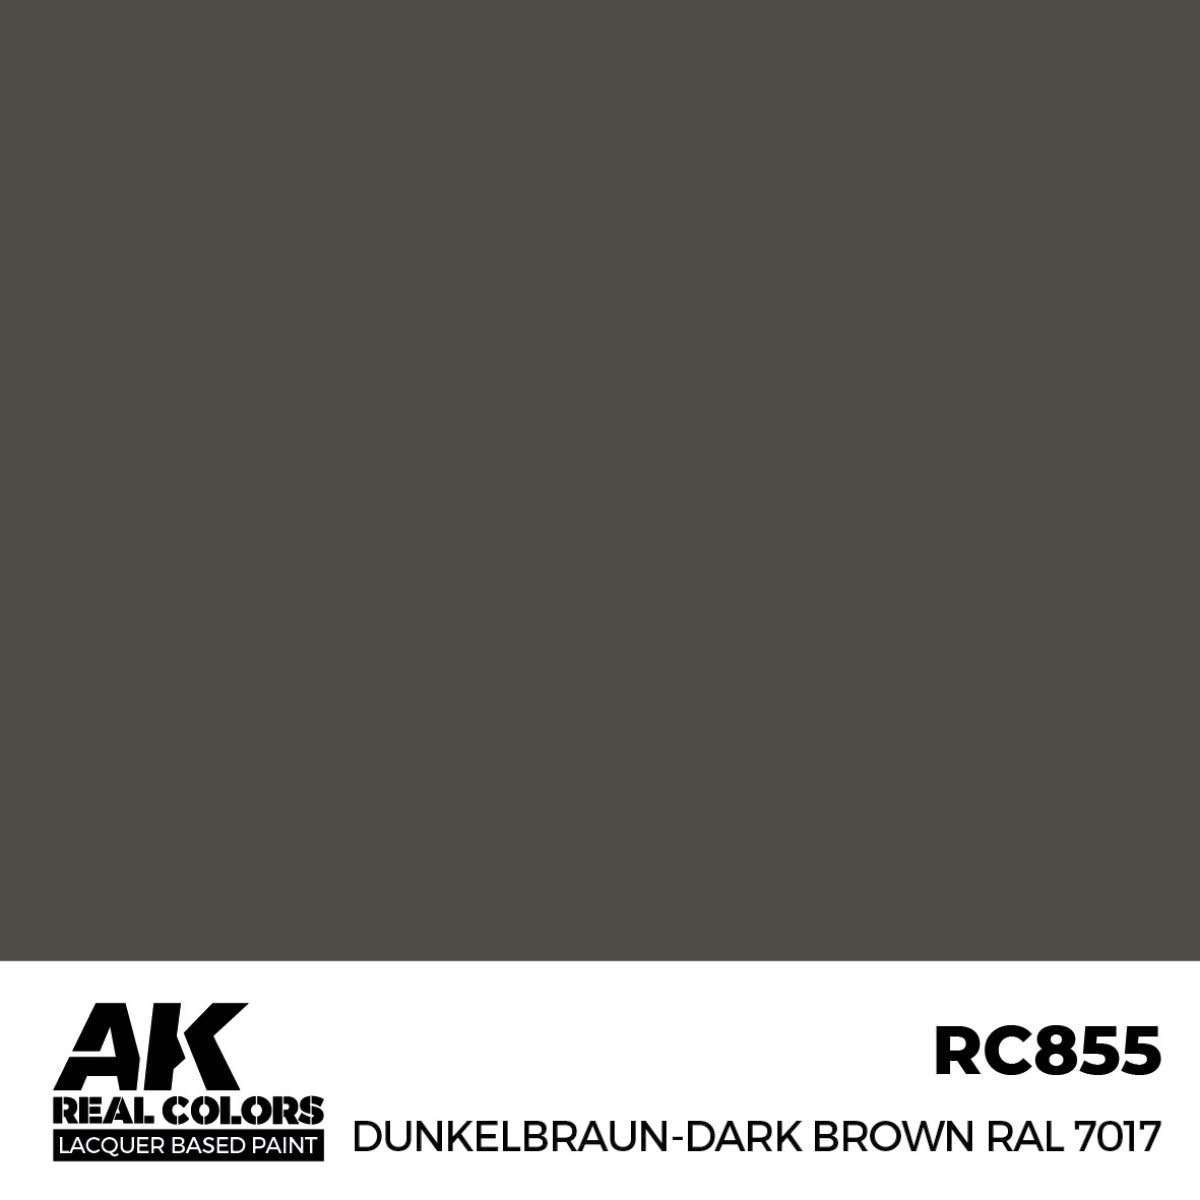 Dunkelbraun-Dark Brown RAL 7017